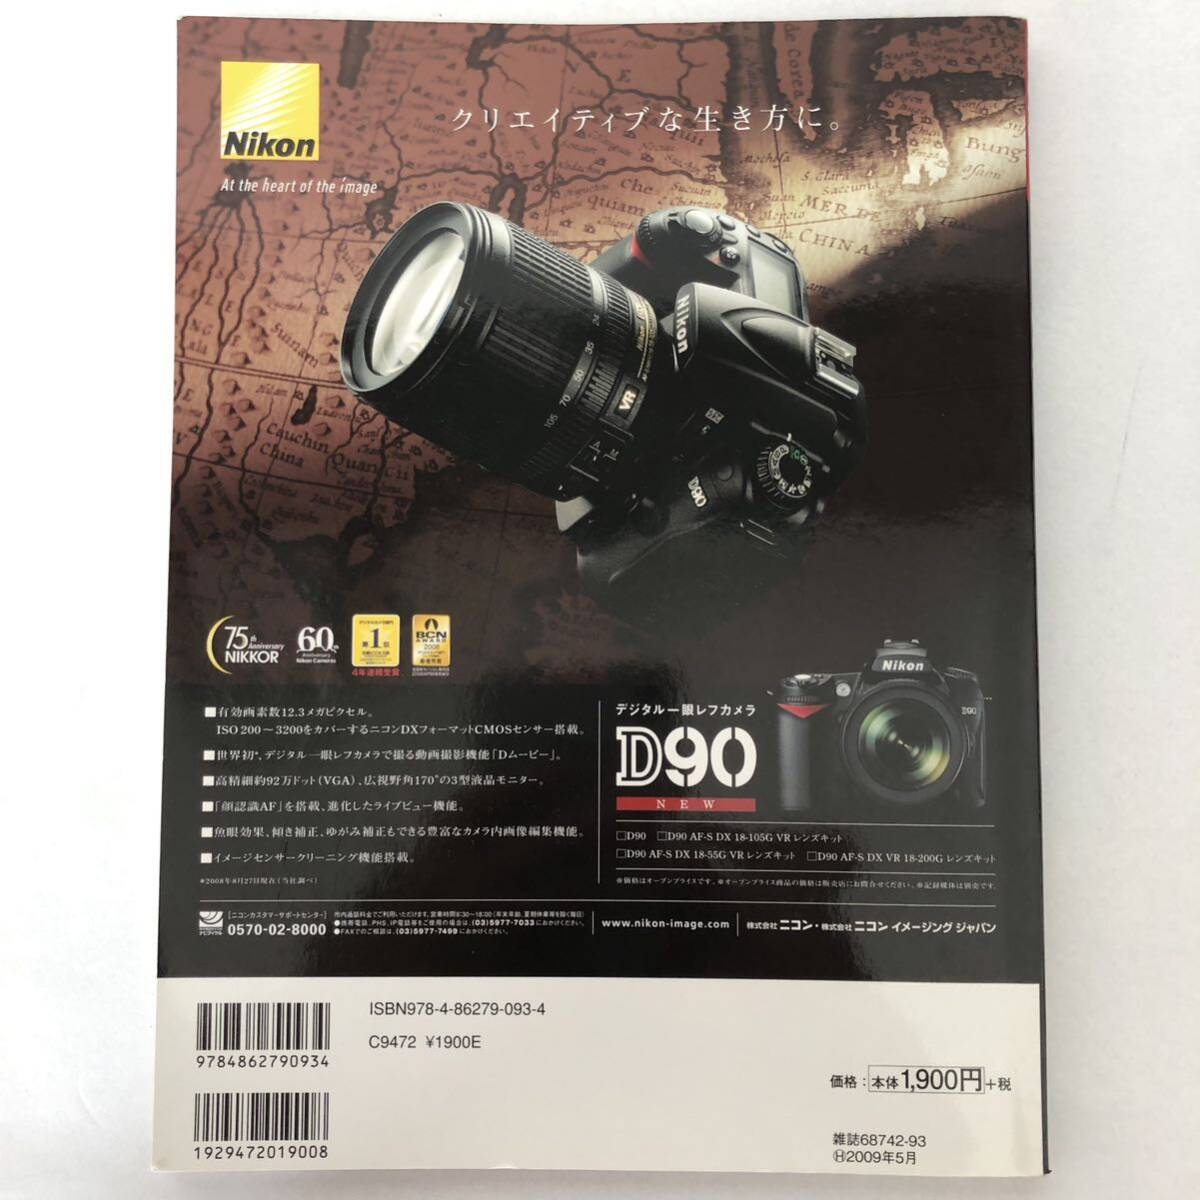 Nikon ニコン D90 オーナーズBOOK (Motor Magazine Mook) カメラマンシリ－ズ 取扱説明書 [送料無料] マニュアル 使用説明書 取説 #M1061